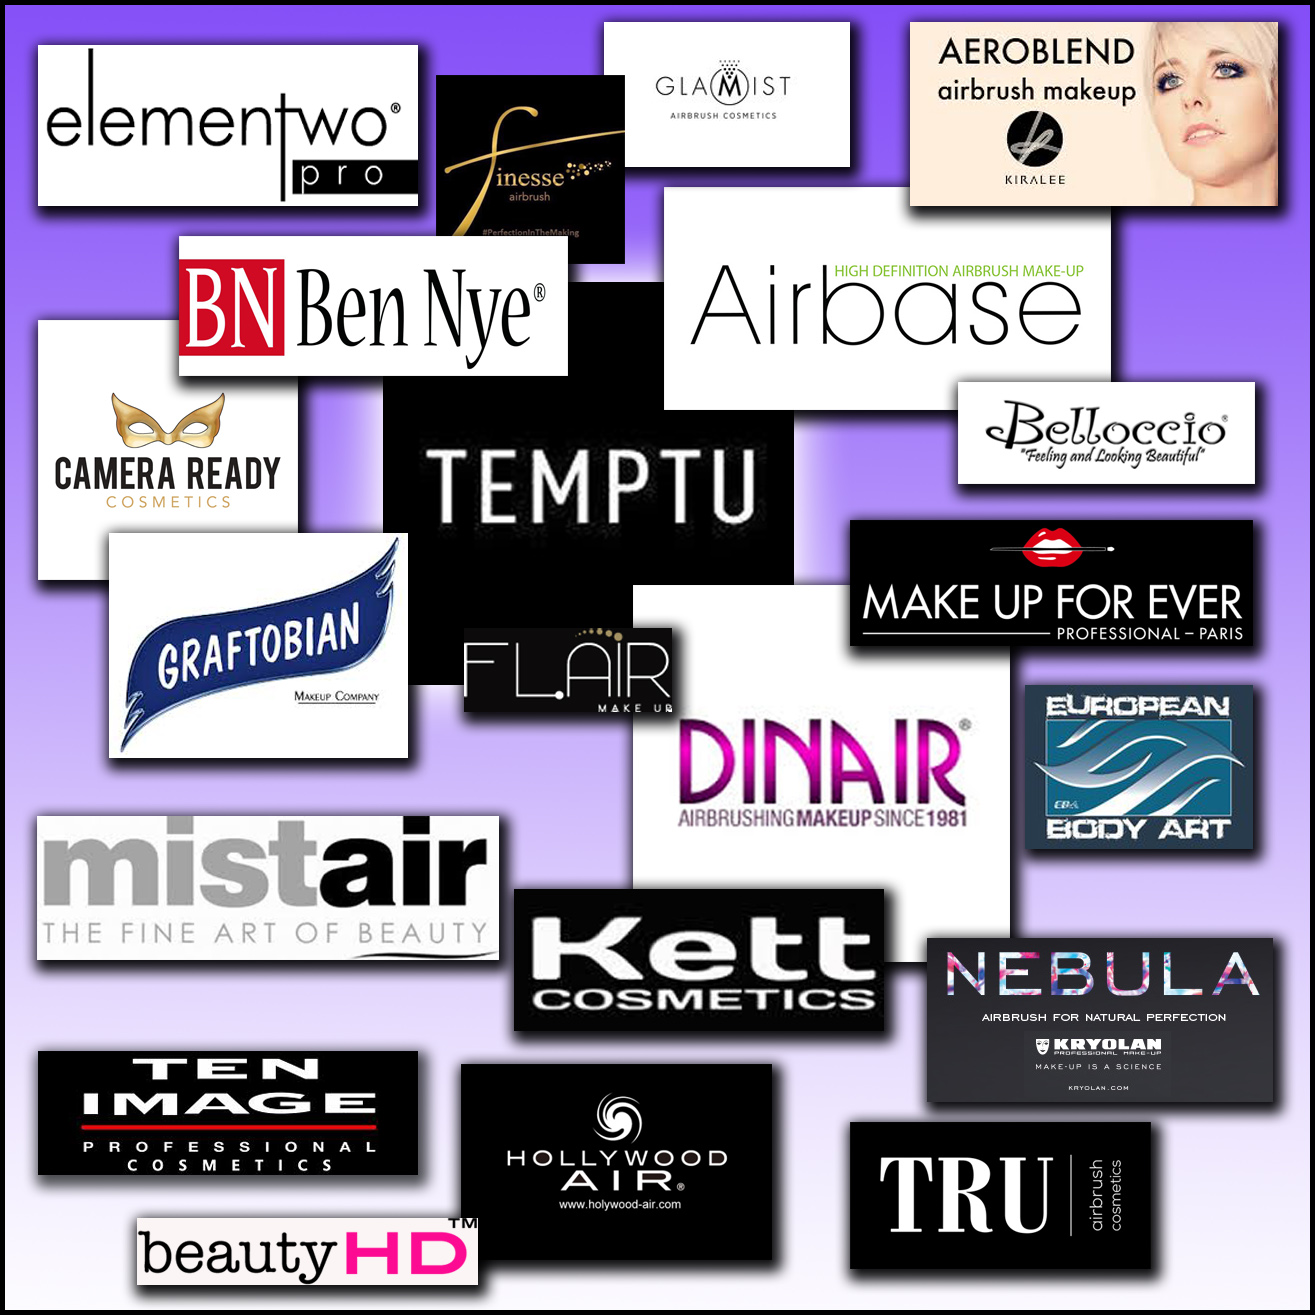 The Airbrush Makeup Guru: Airbrush Makeup Kit Review: Aeroblend